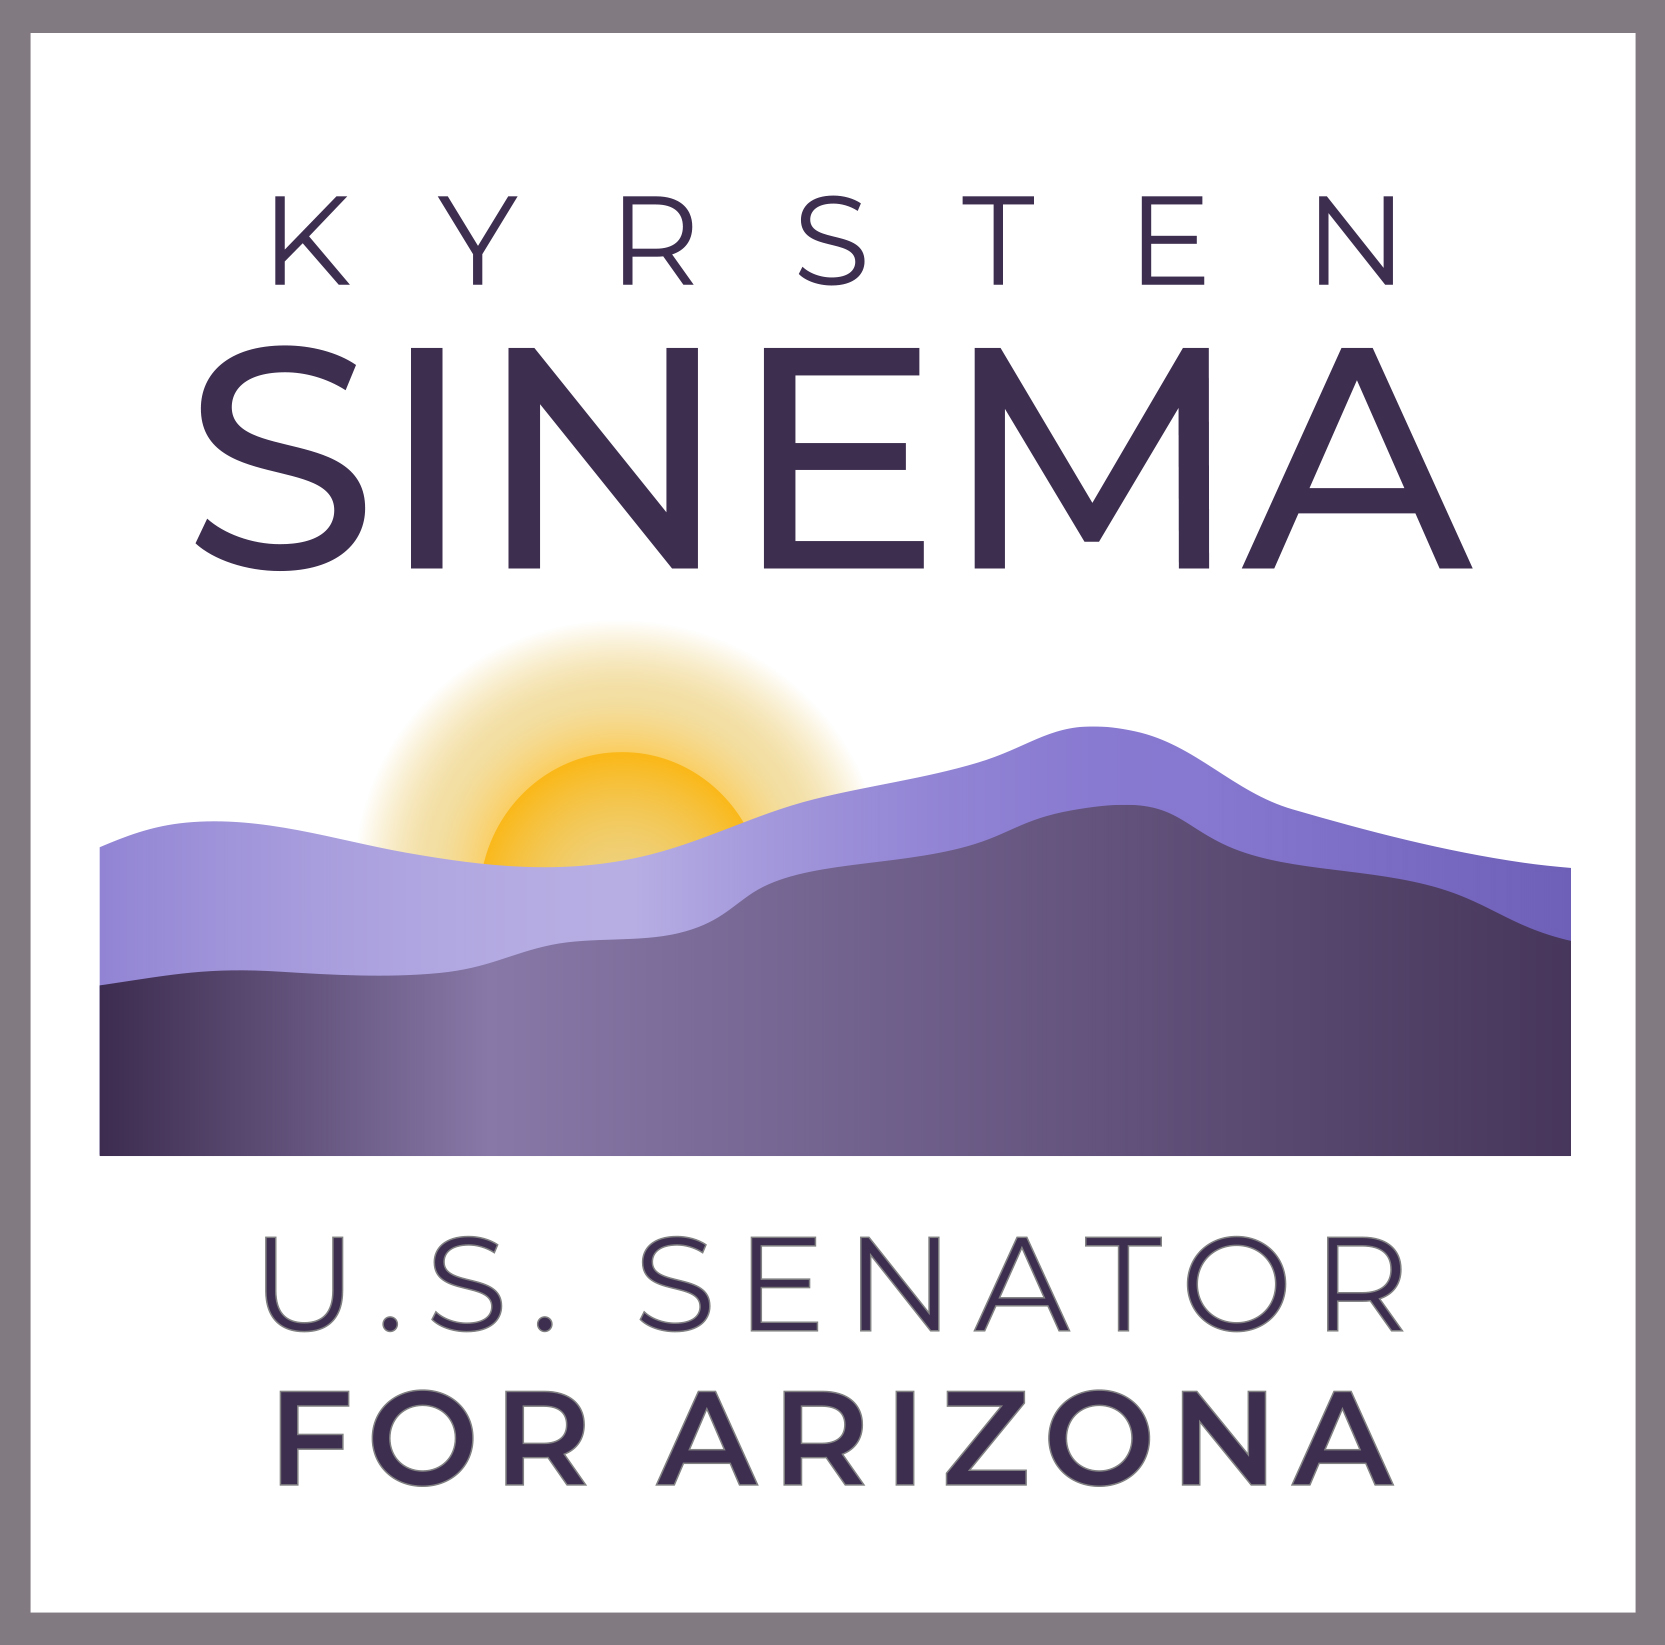 Senator Sinema's Logo